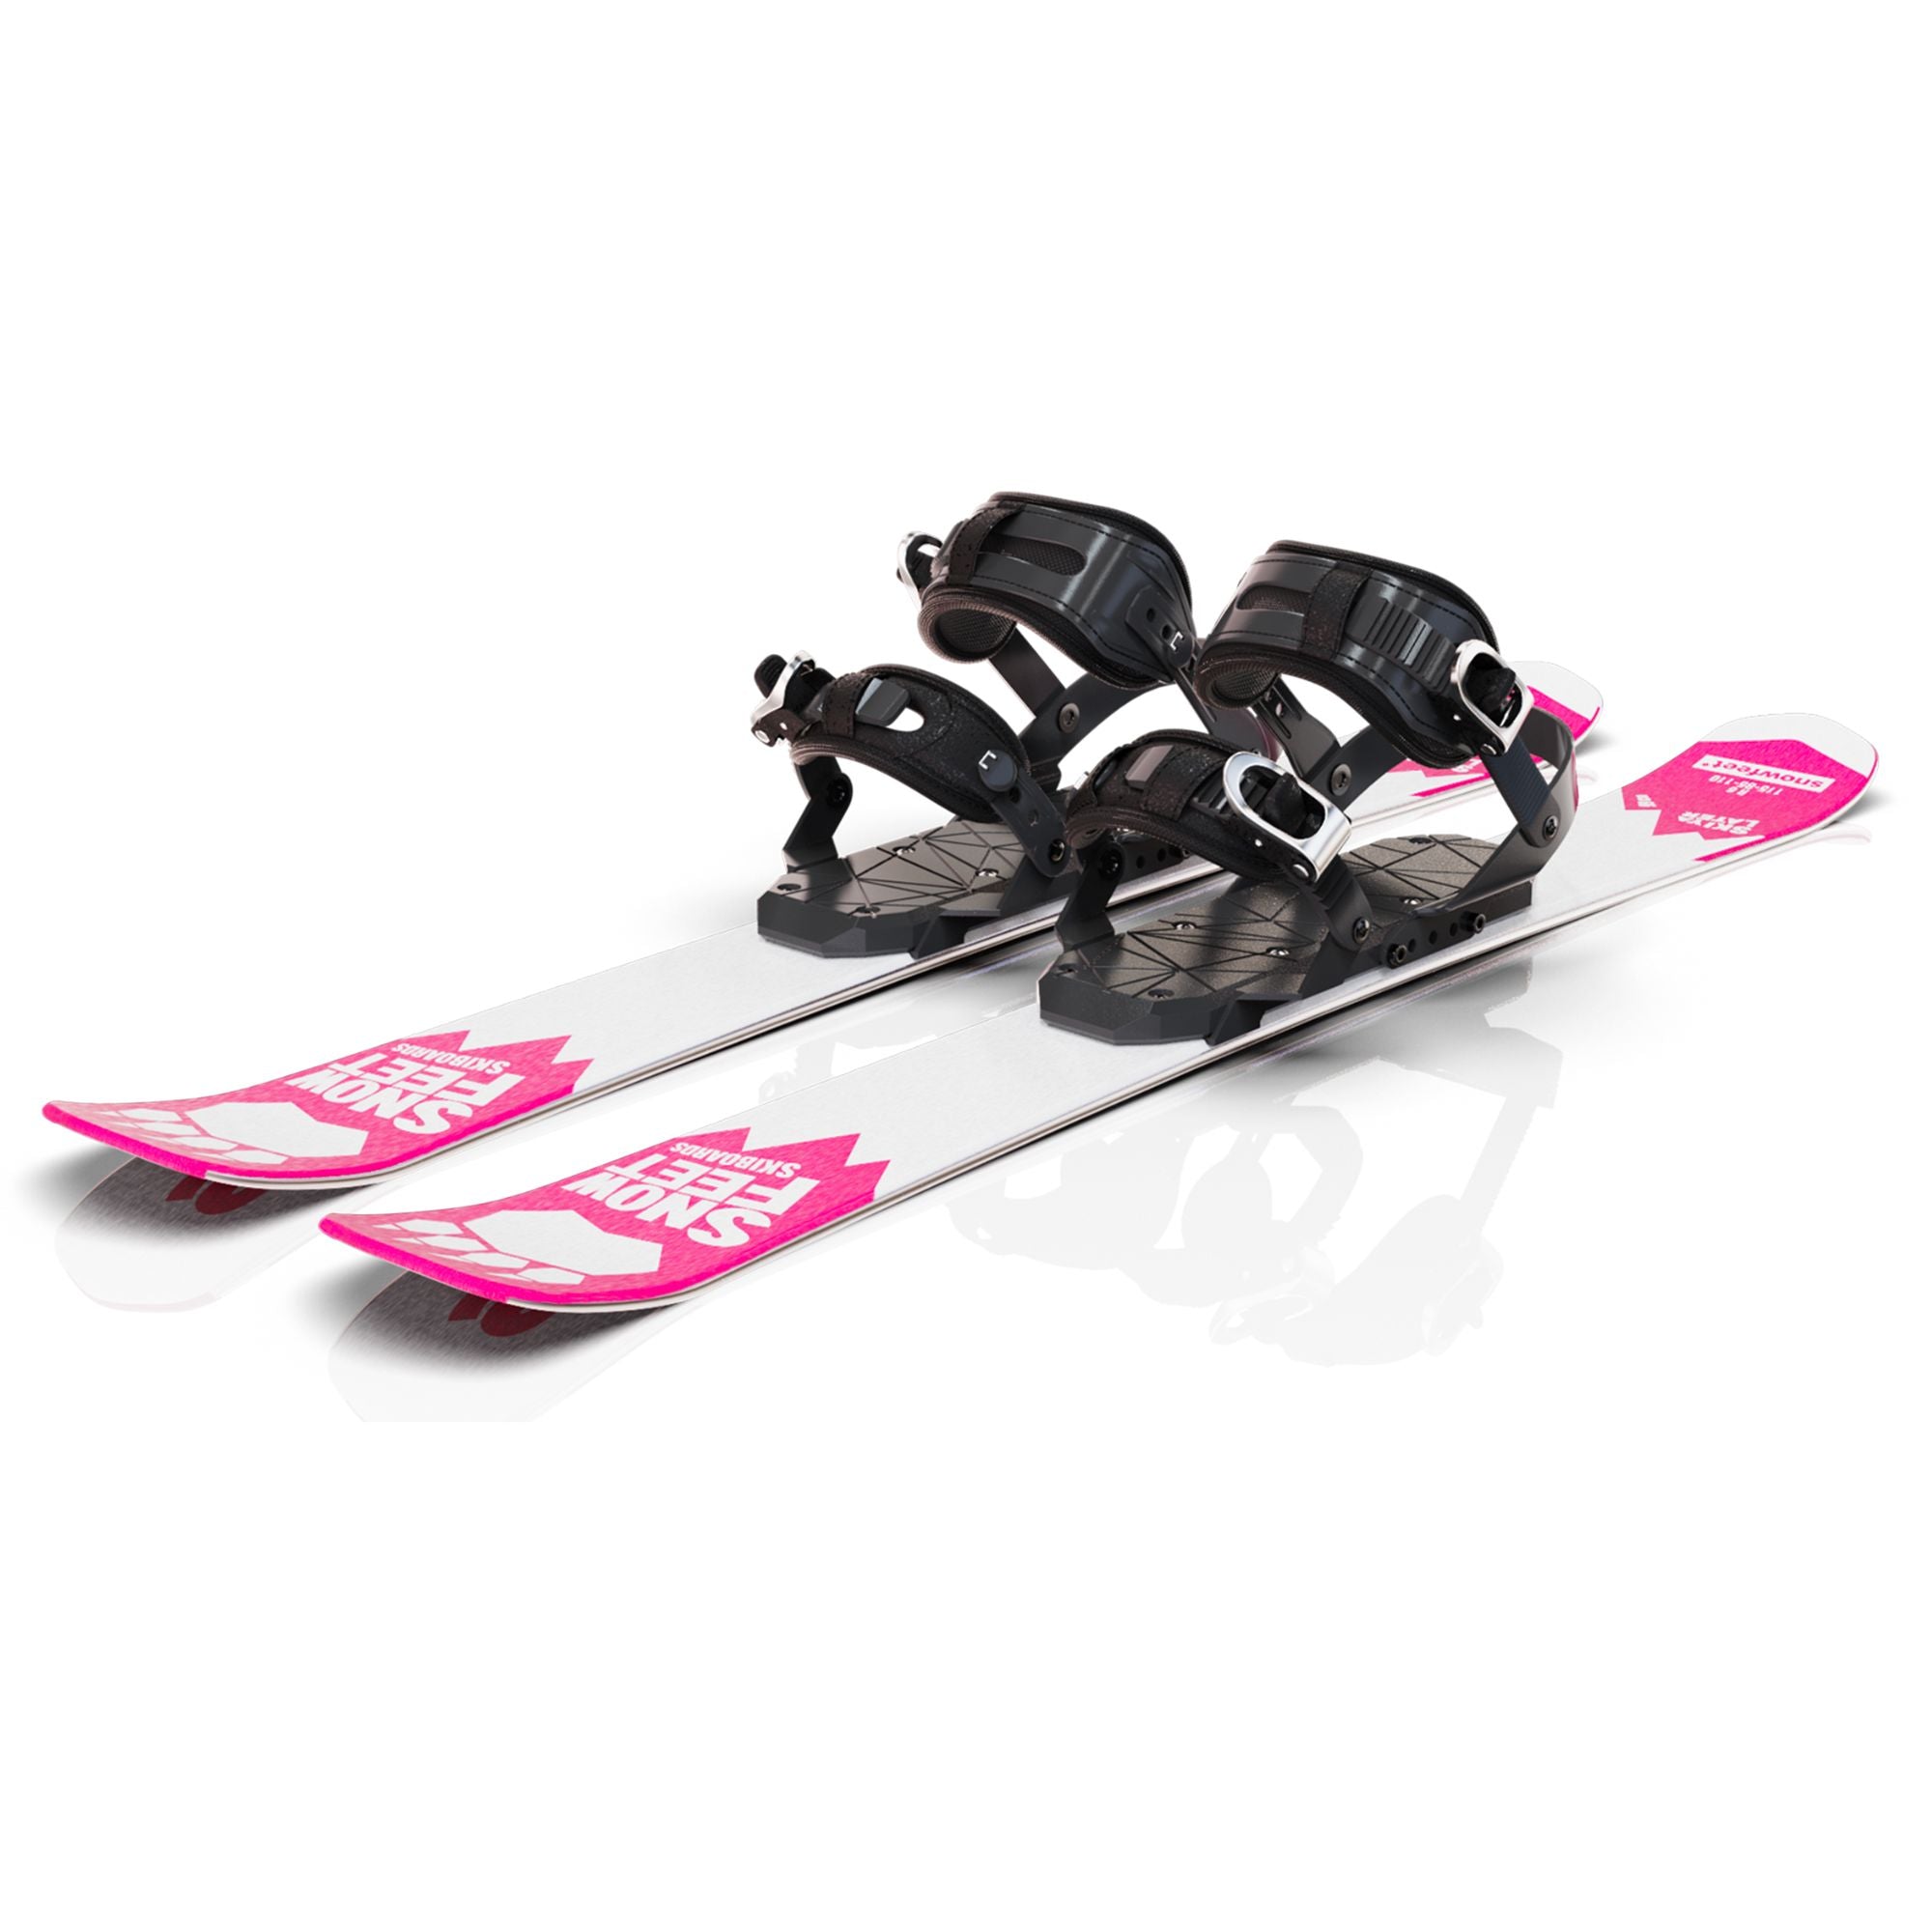 skiboards snowblades short ski 99 snowfeet mini little ski skiblades for snowboard boot with snowboard boot bindings pink